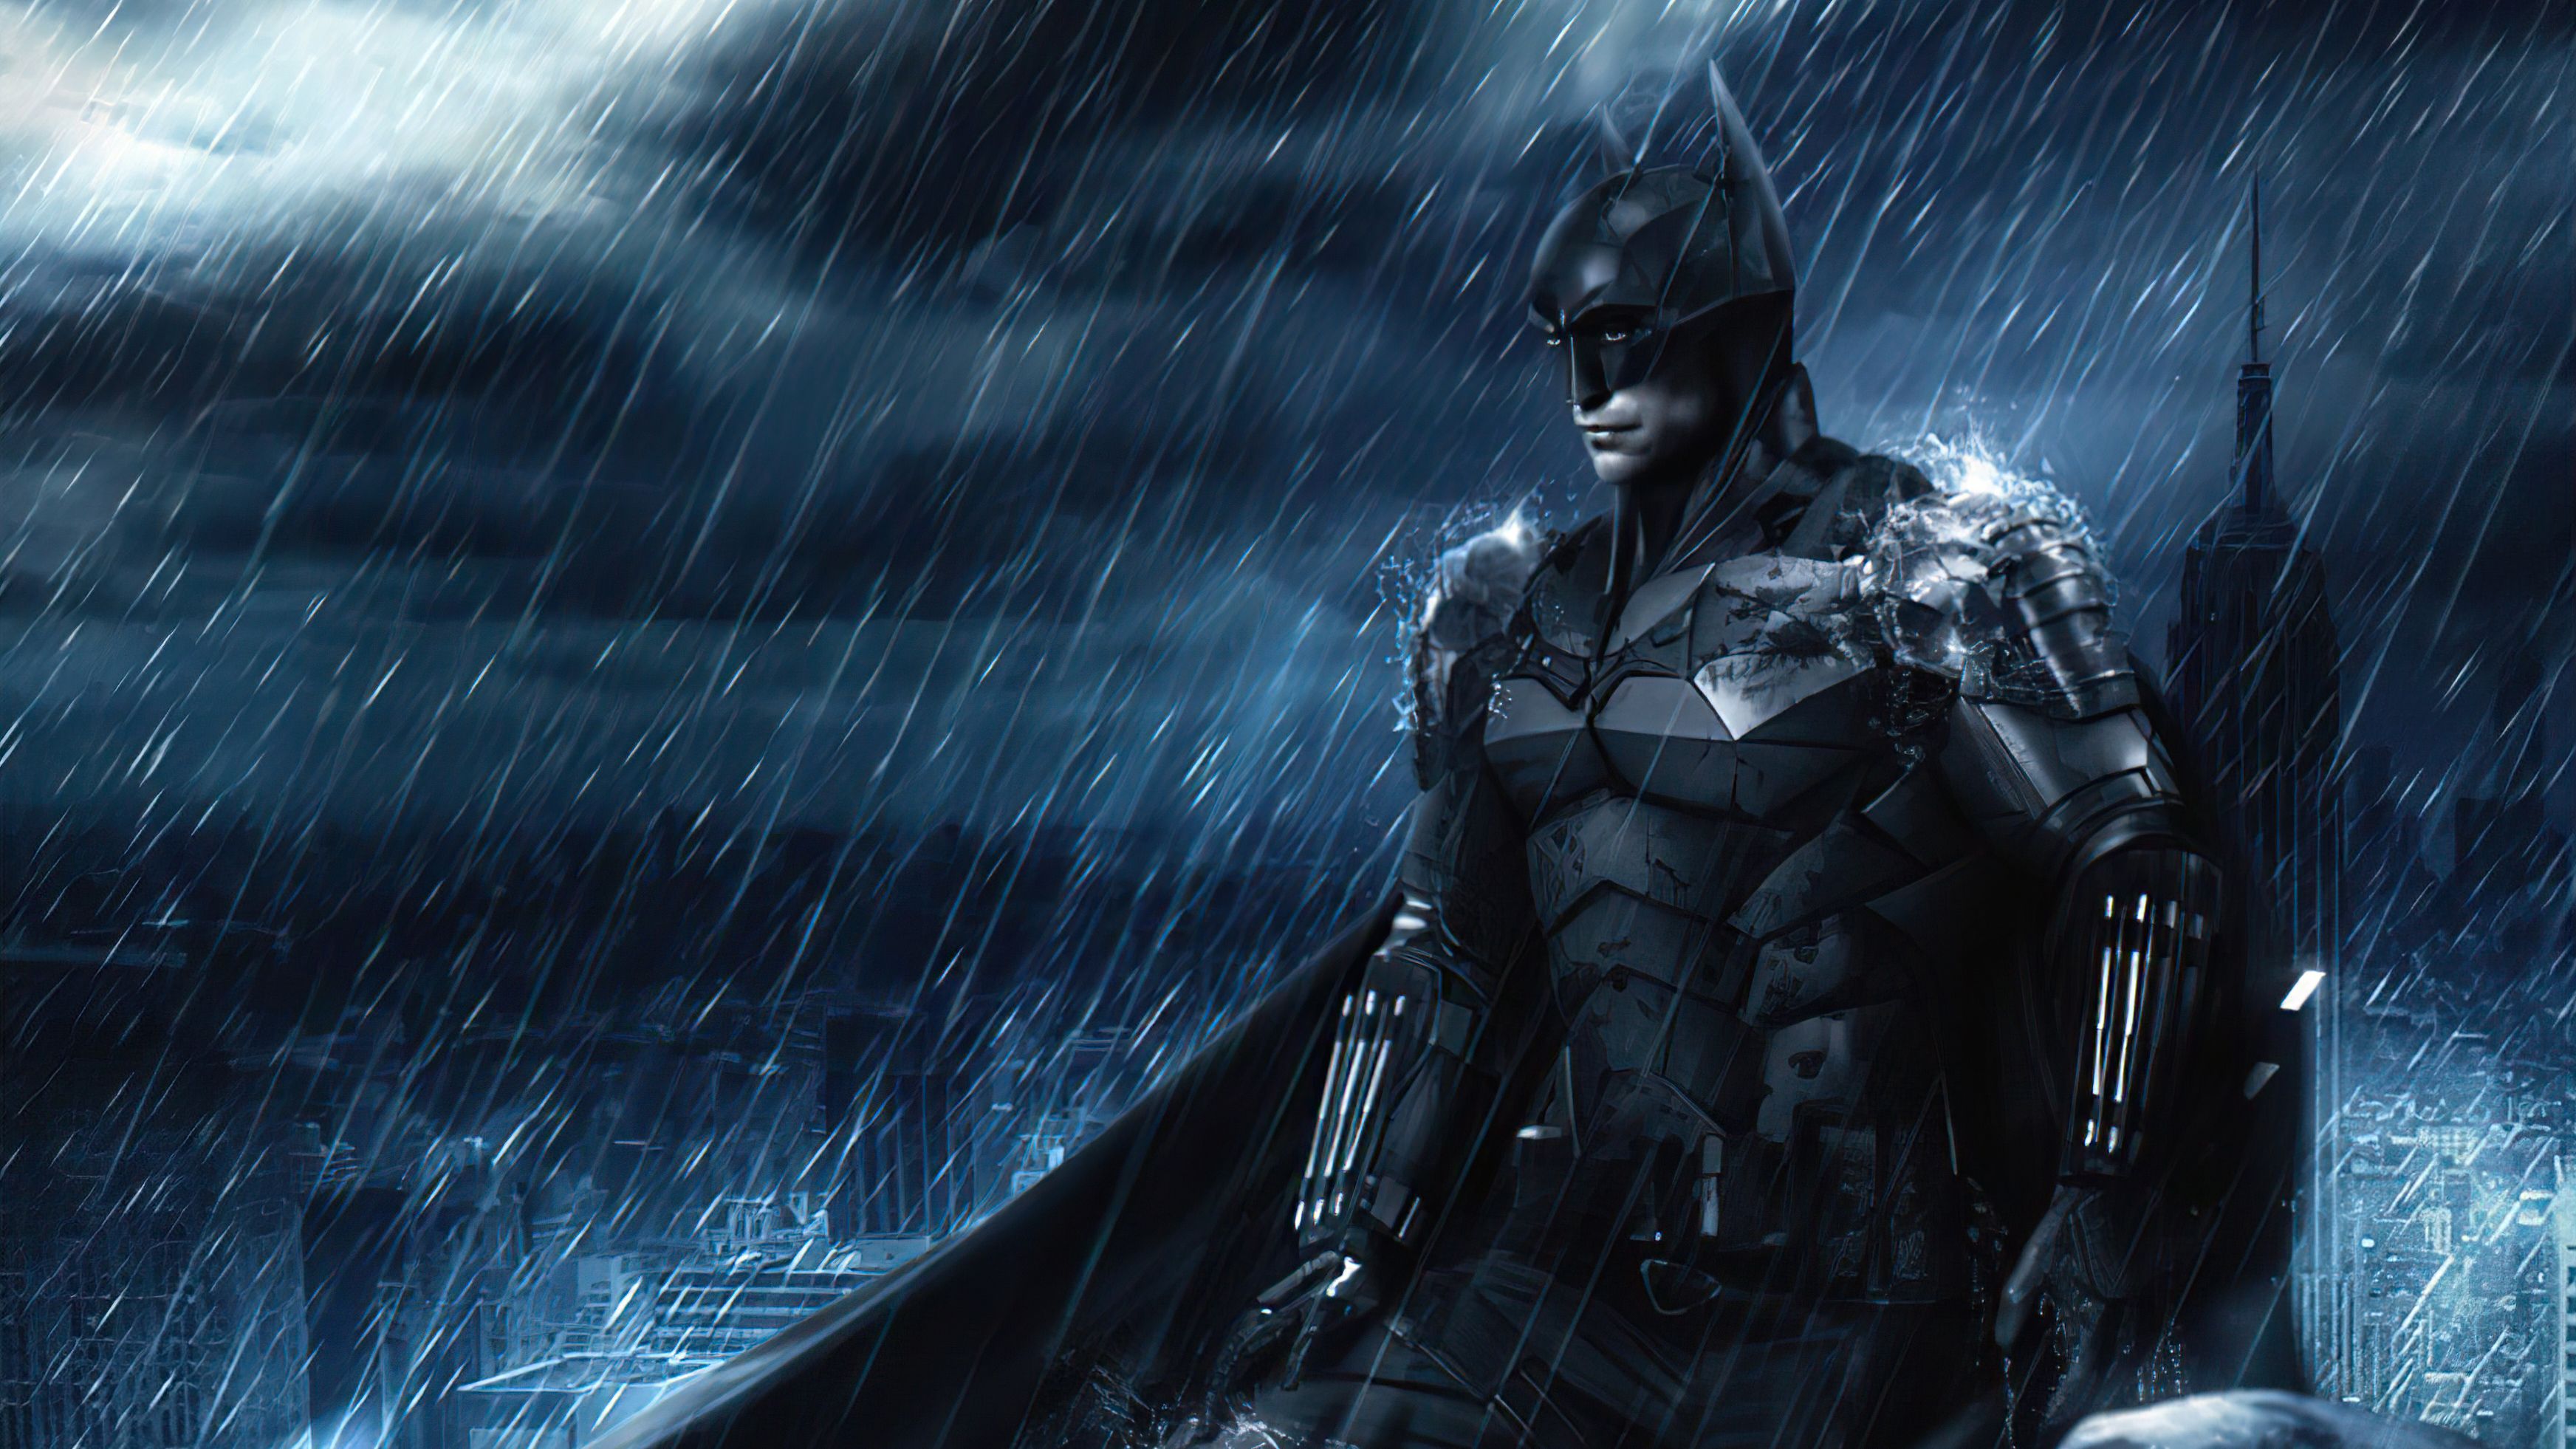  Batman Hintergrundbild 3488x1962. Batman In Night 4k, HD Superheroes, 4k Wallpaper, Image, Background, Photo and Picture